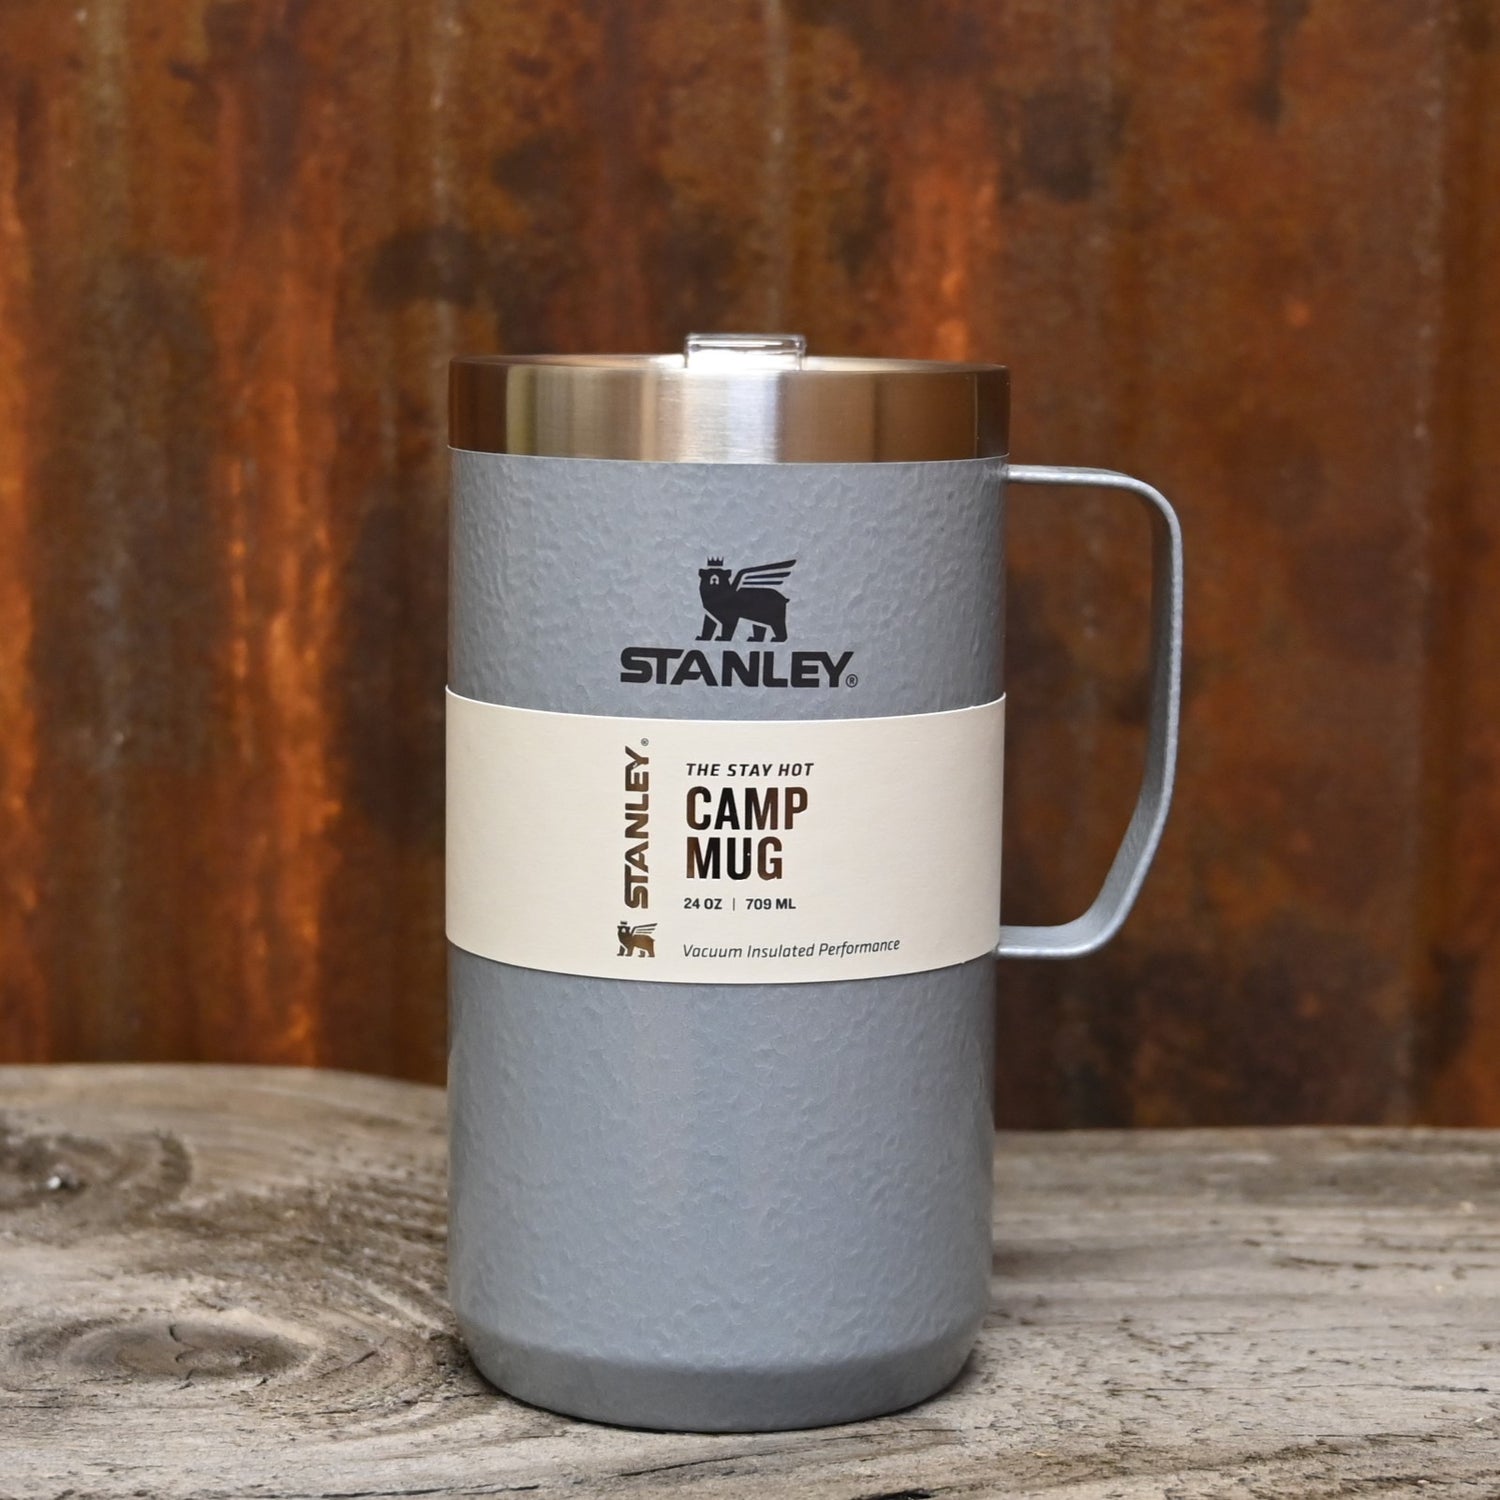 Stanley 24 Oz Stay Hot Camp Mug in Hammertone Silver view of mug